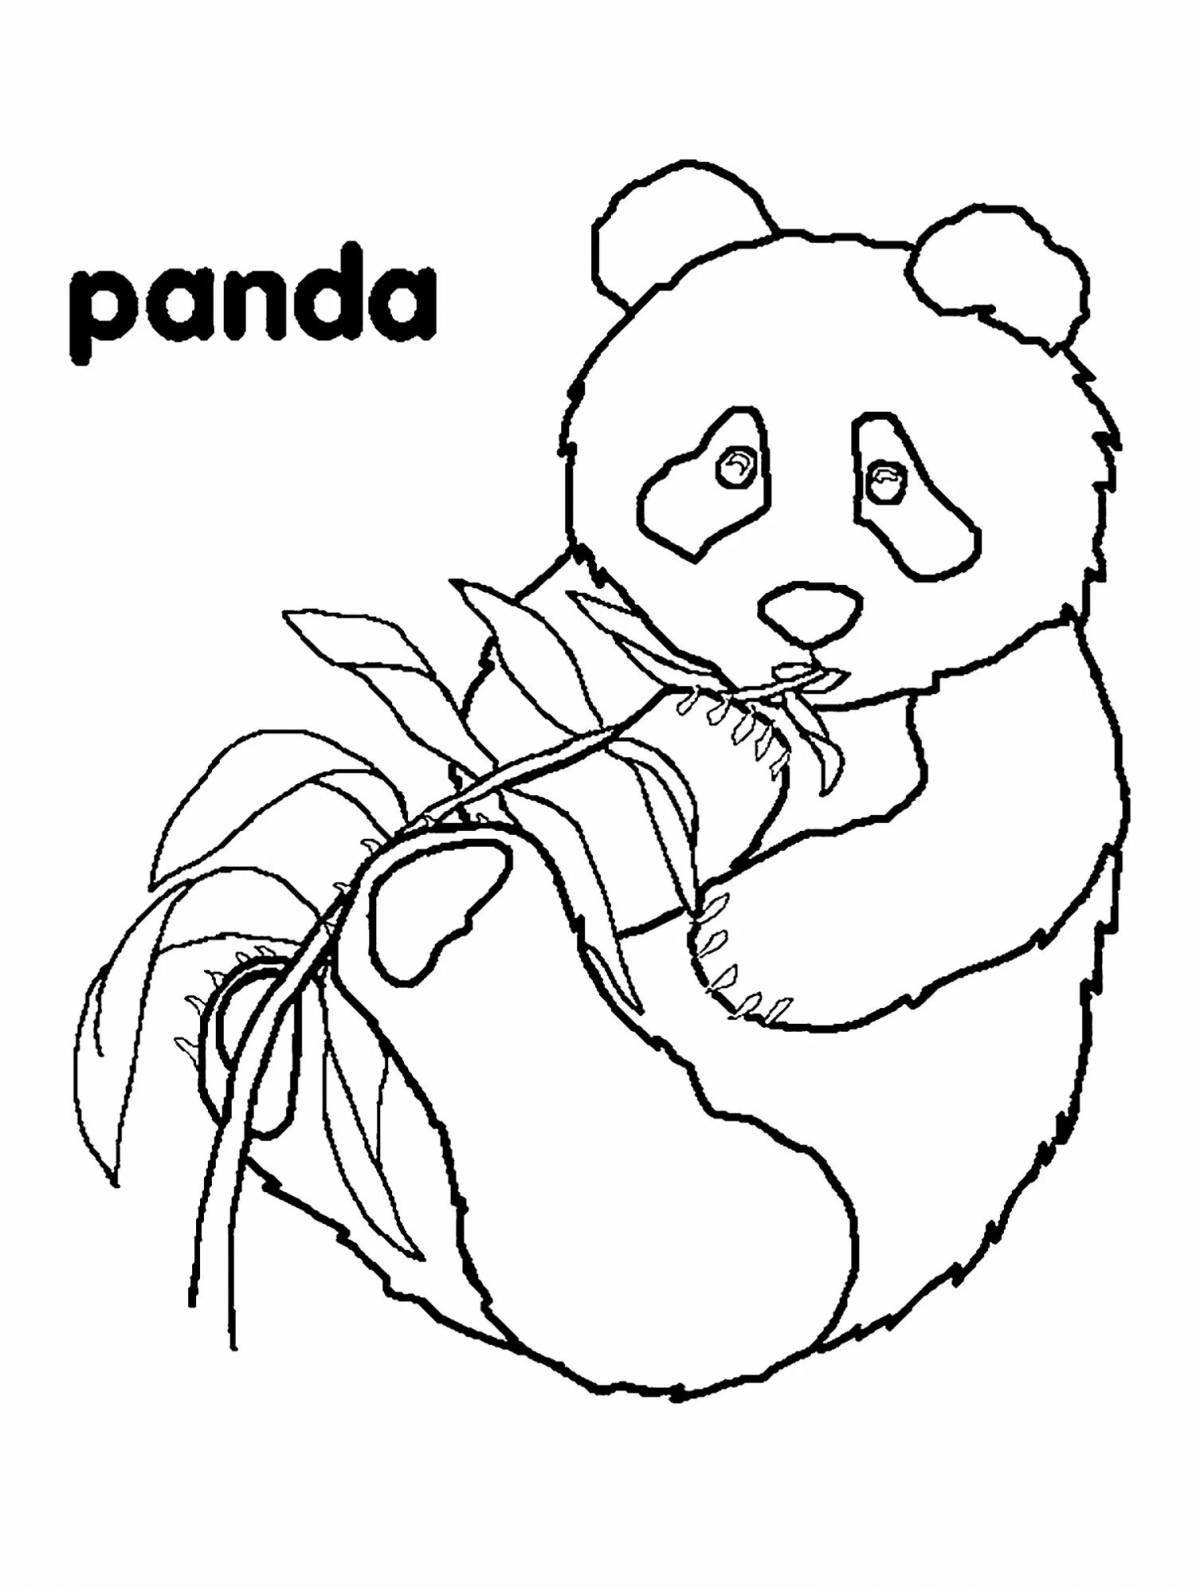 Playful panda drawing for kids